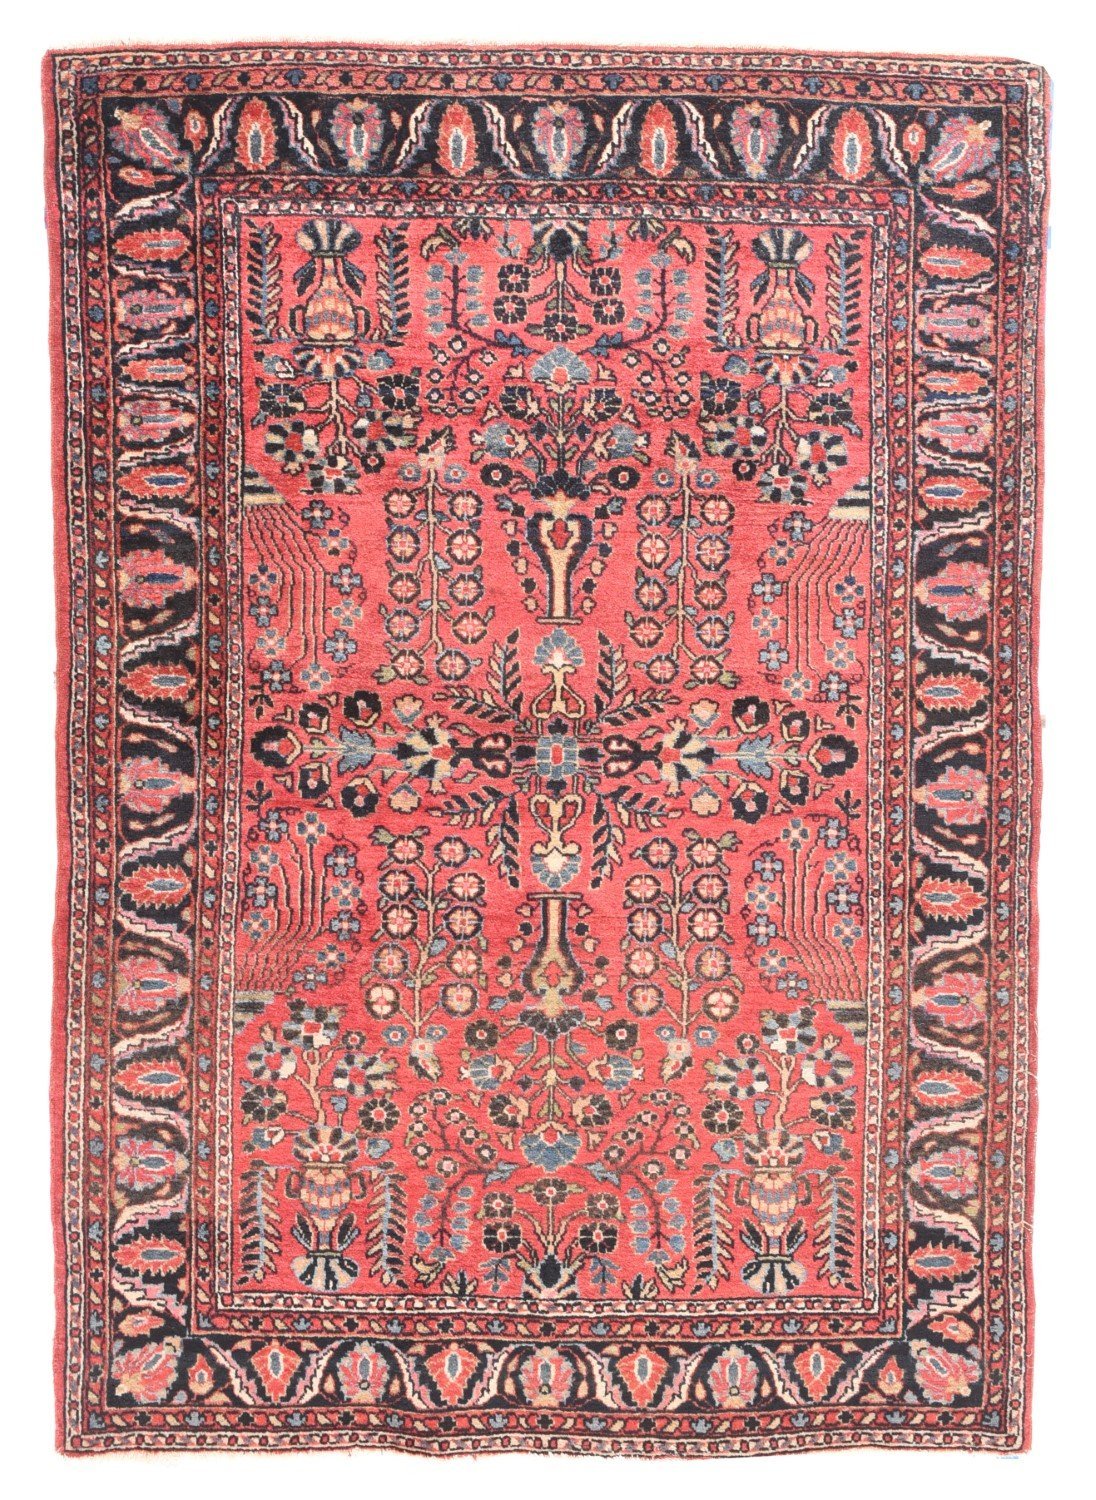 Antique Persian Sarouk, Size 3'5" X 4'11"